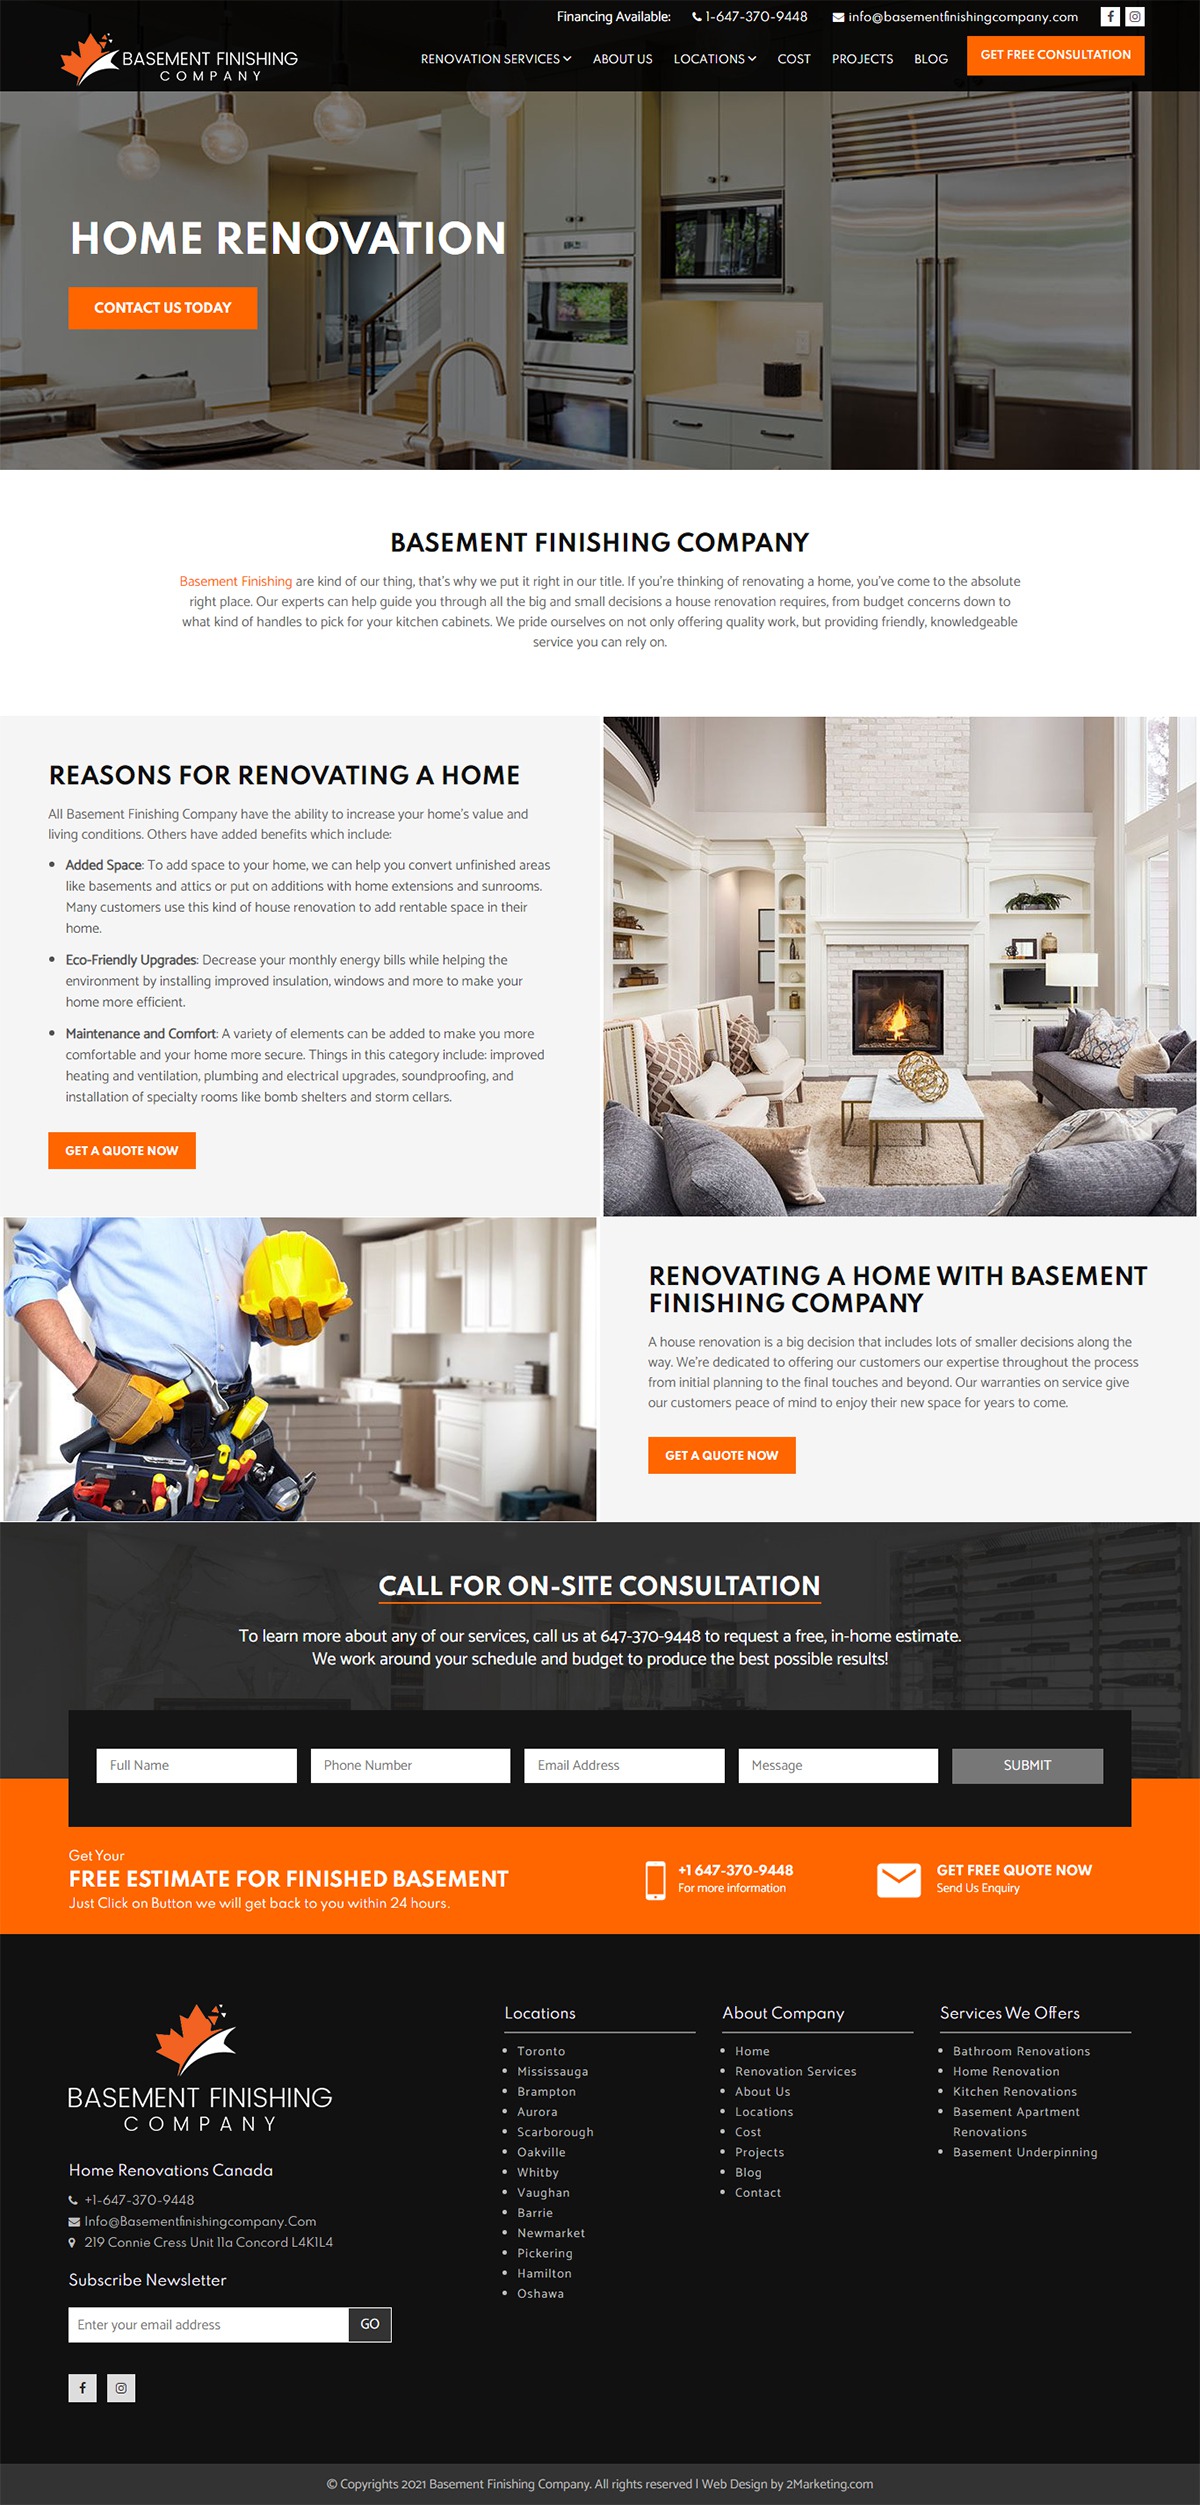 basementfinishingcompany-home-renovation